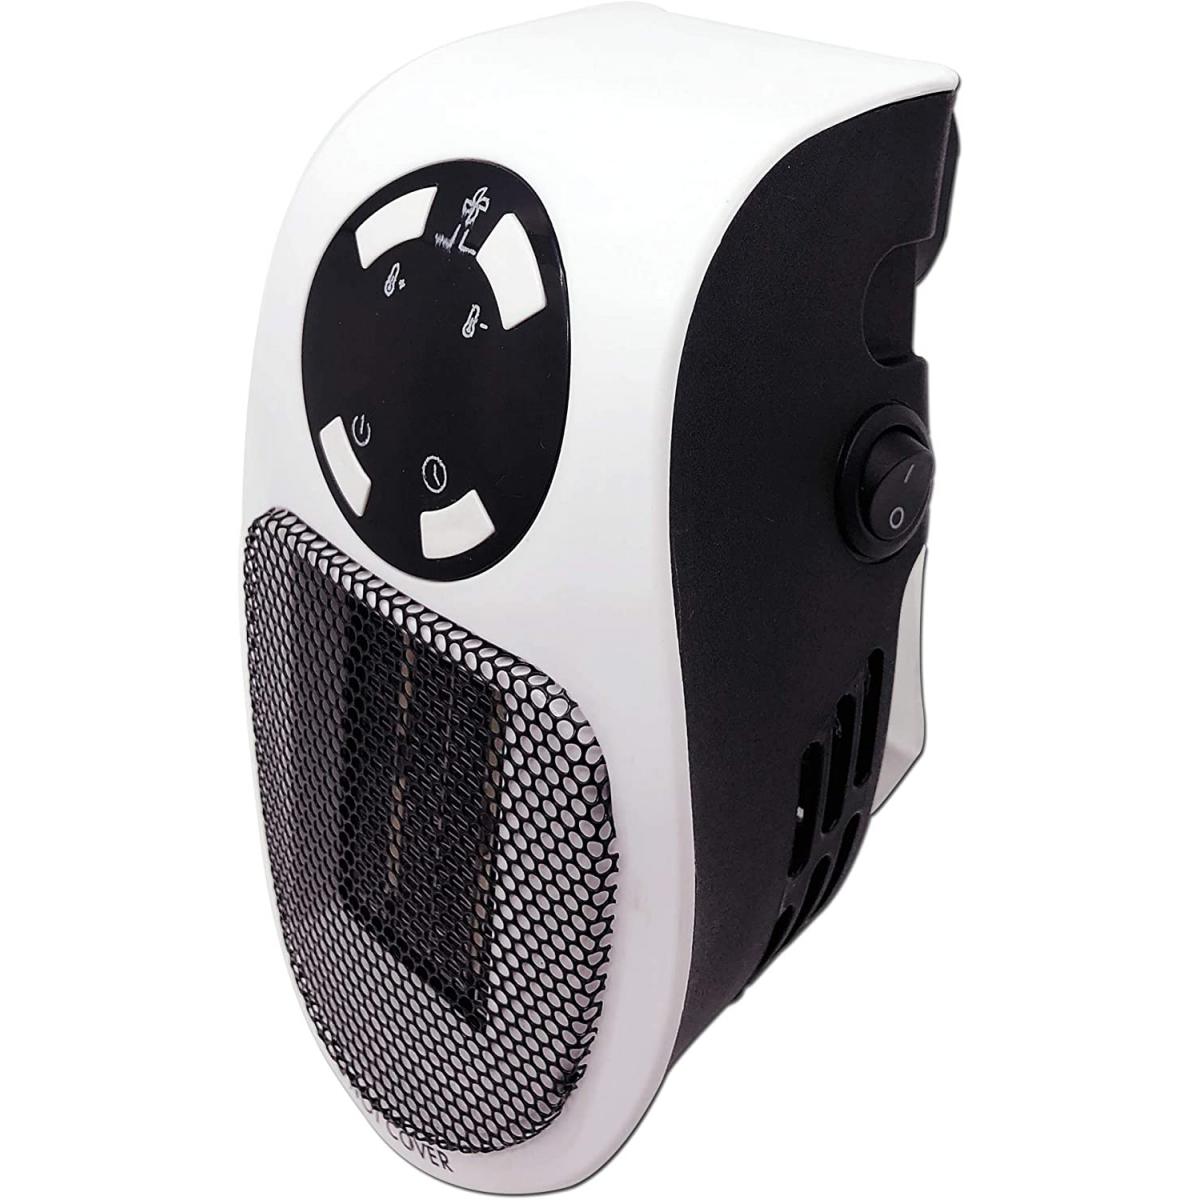 Radiateur soufflant Vendos85 mini chauffage avec thermostat réglable 400W blanc noir